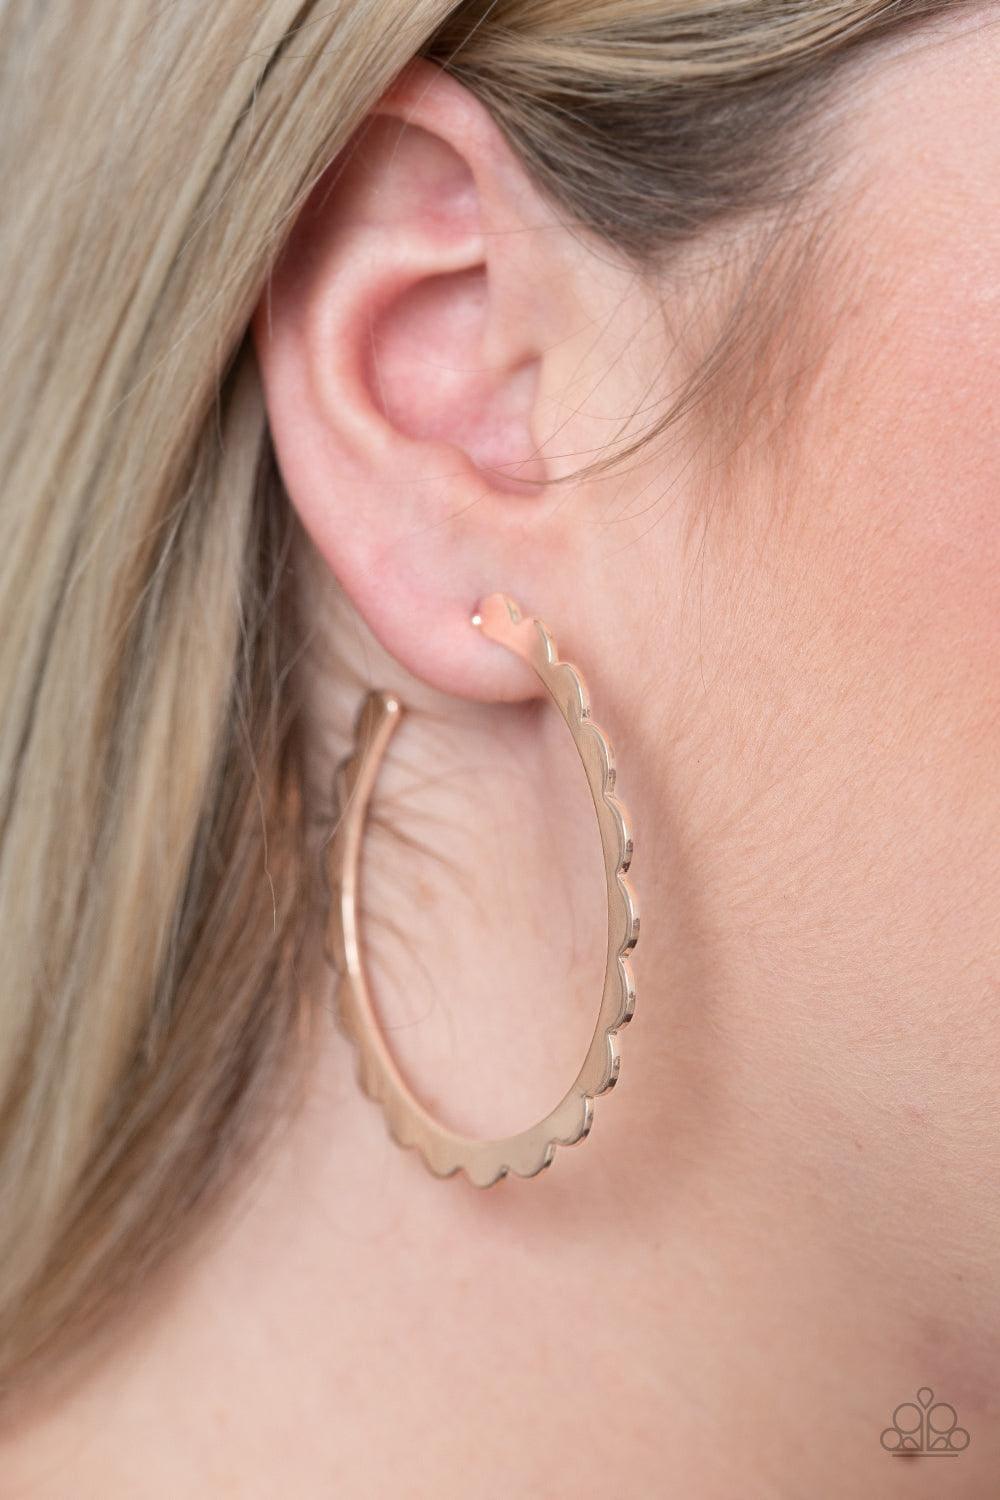 Paparazzi Accessories - Radiant Ridges - Rose Gold Earrings - Bling by JessieK